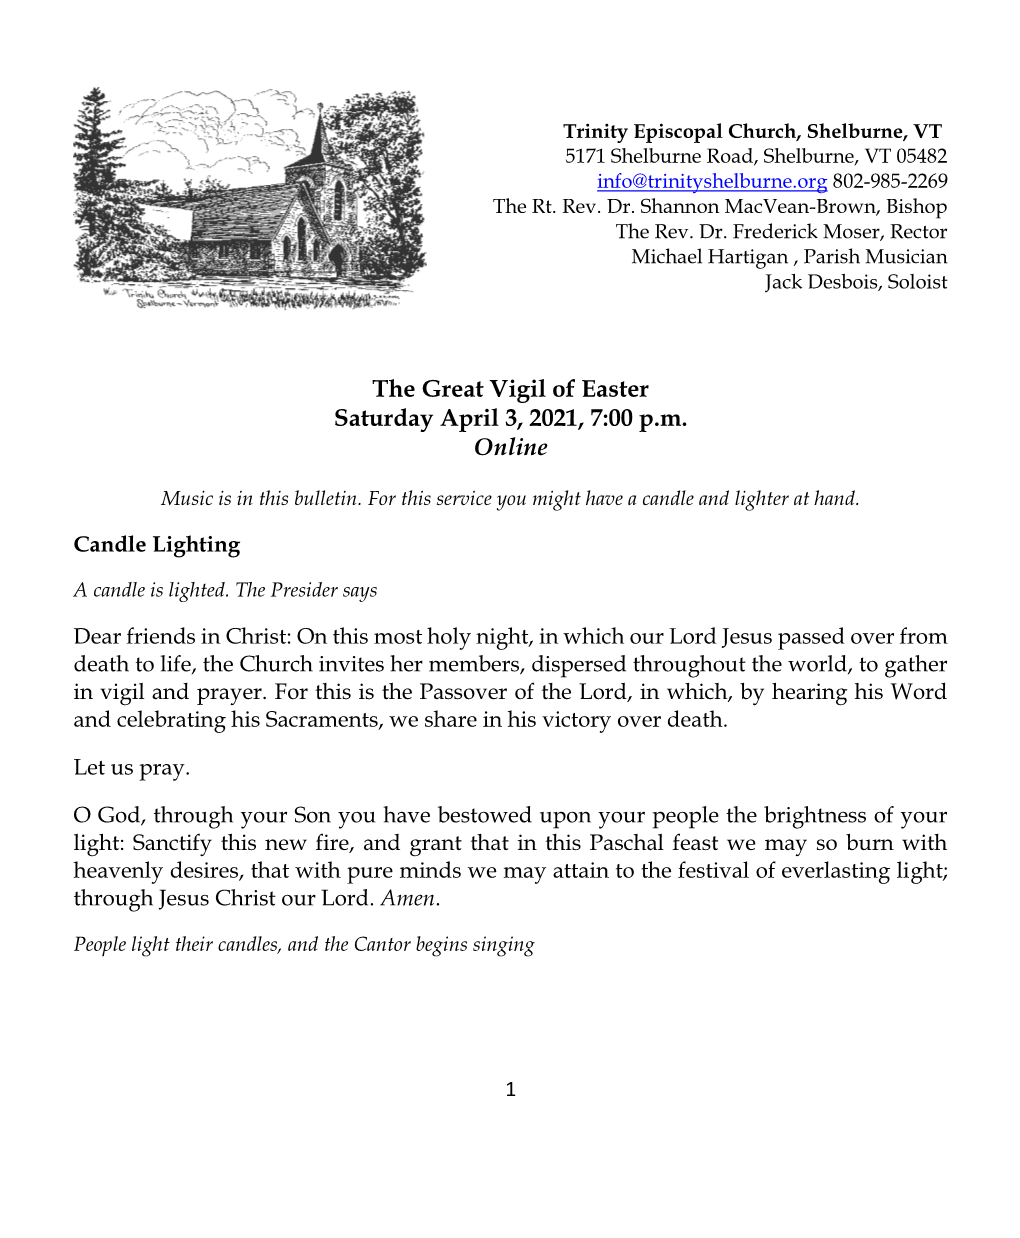 The Great Vigil of Easter Saturday April 3, 2021, 7:00 P.M. Online